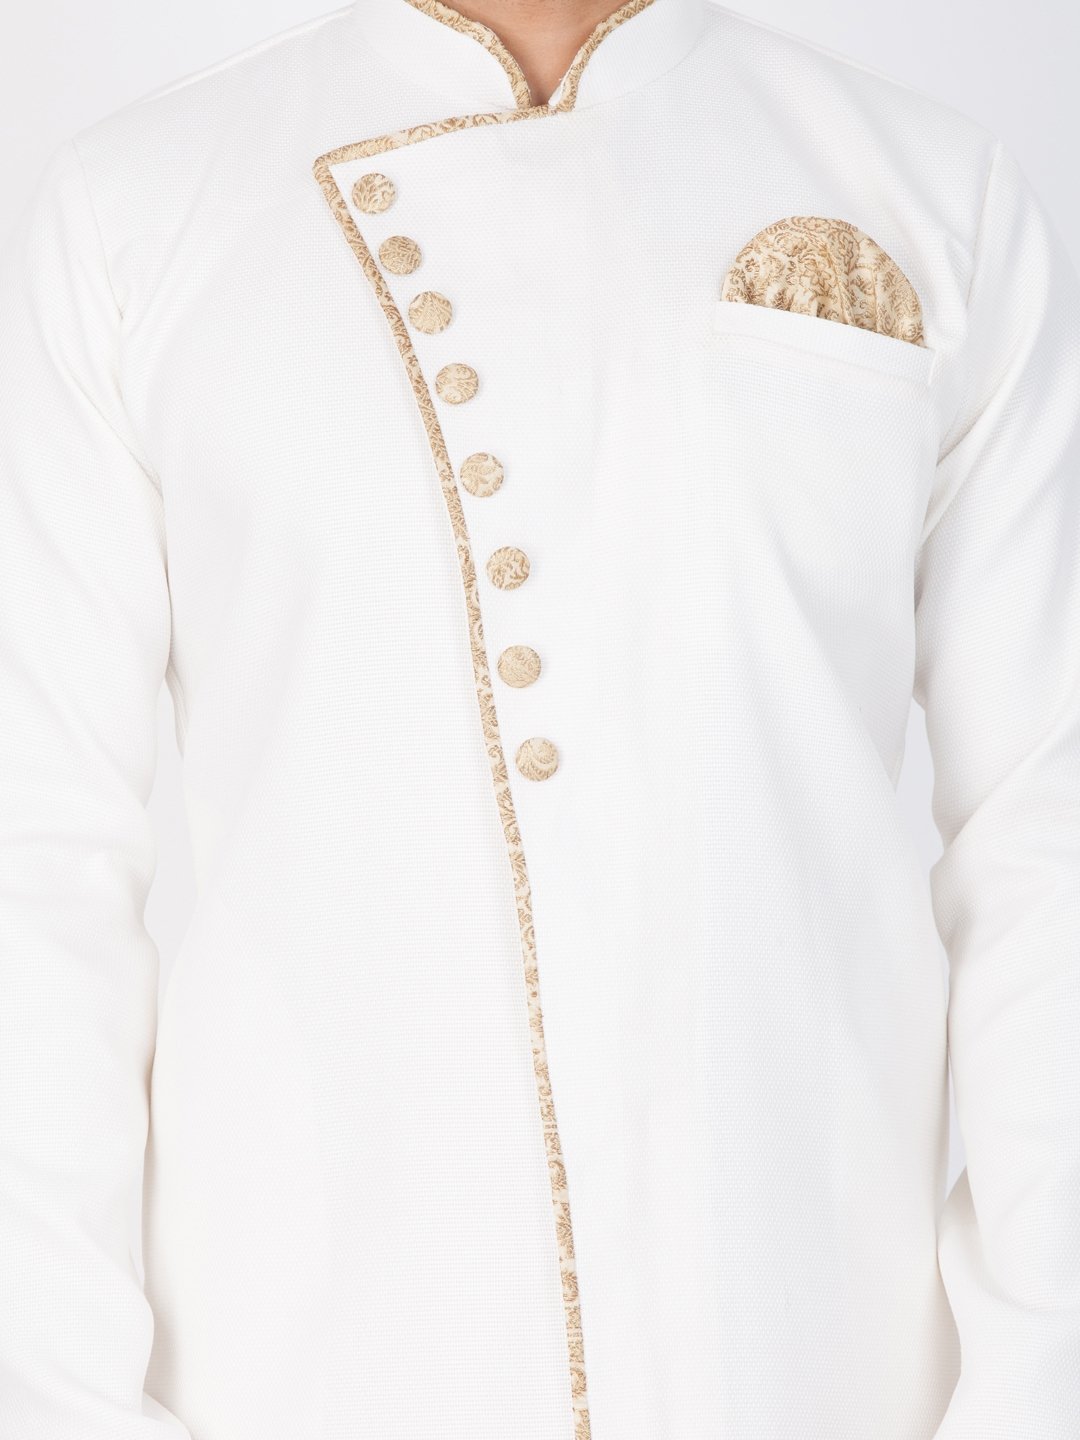 Men's White Cotton Blend Sherwani Set